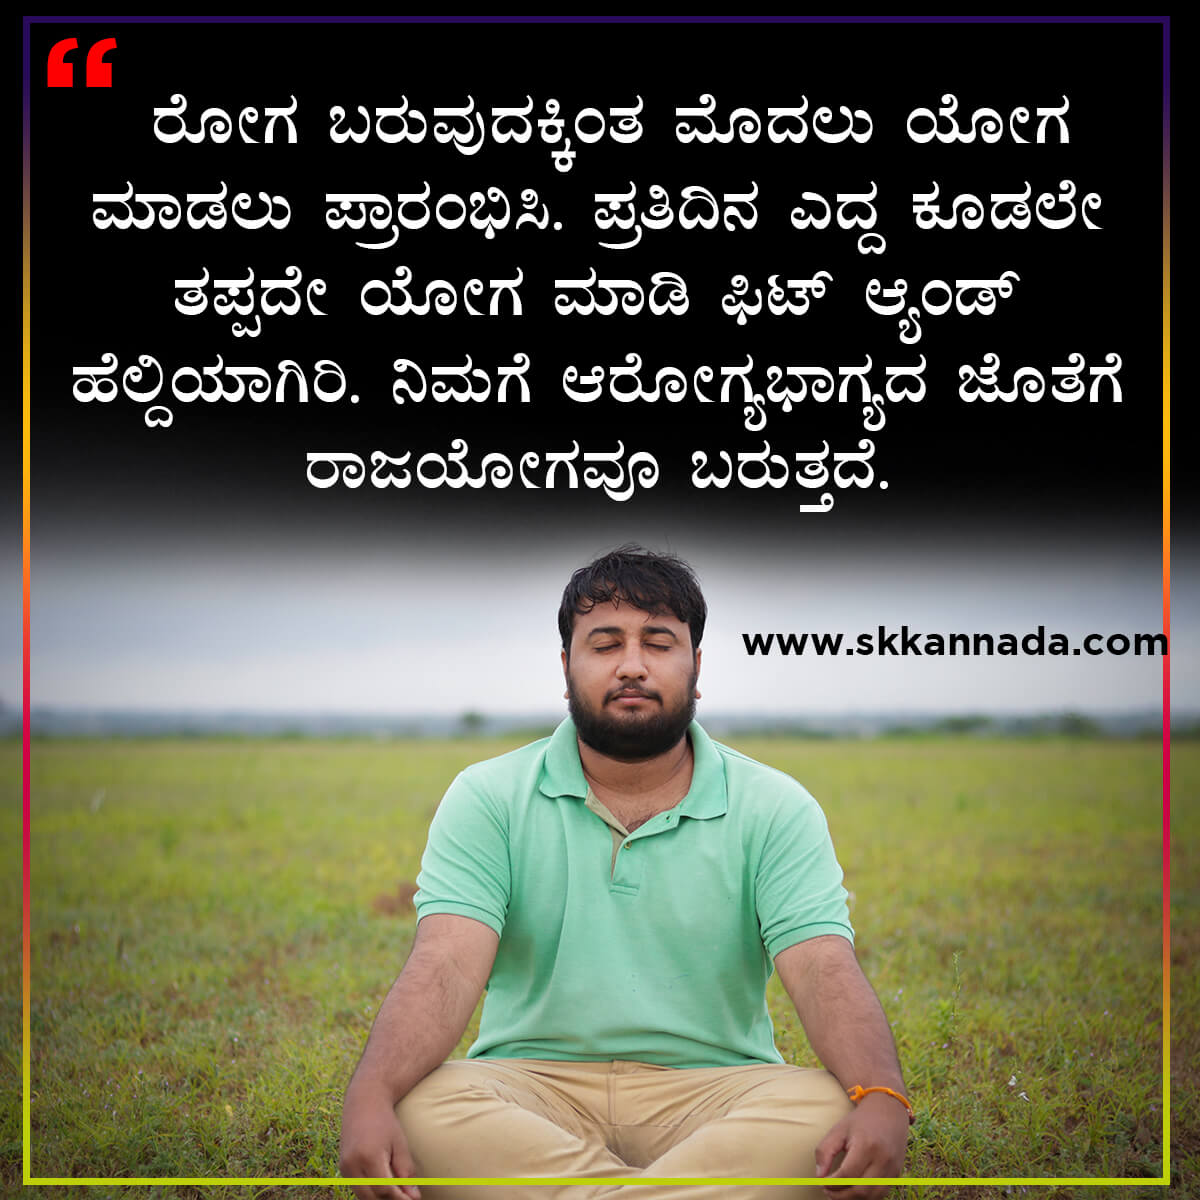 Good Morning Quotes in Kannada